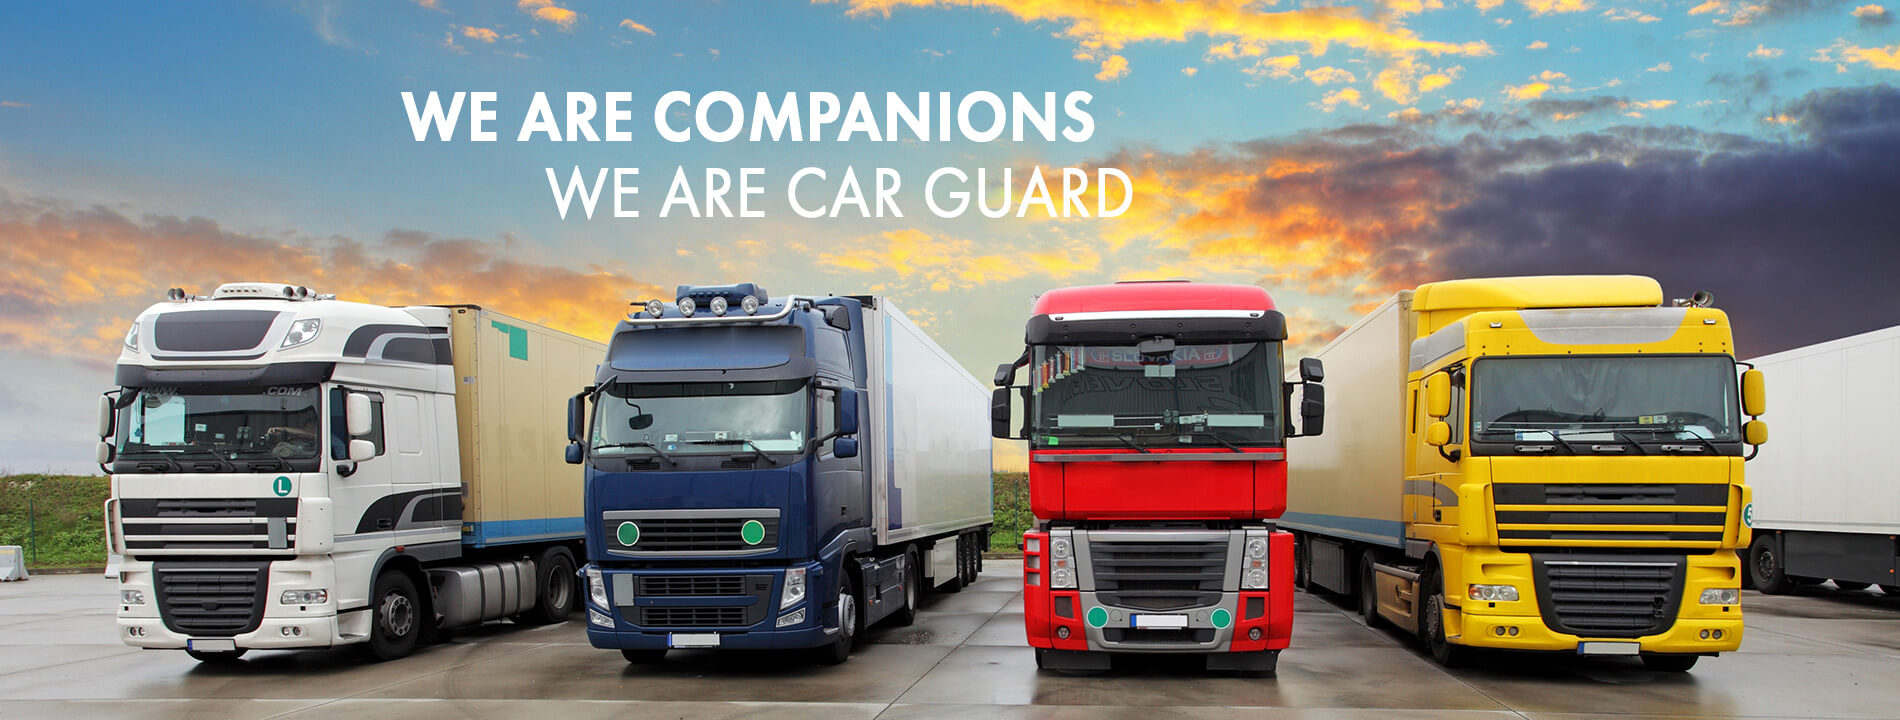 We are companions - We are Car Guard